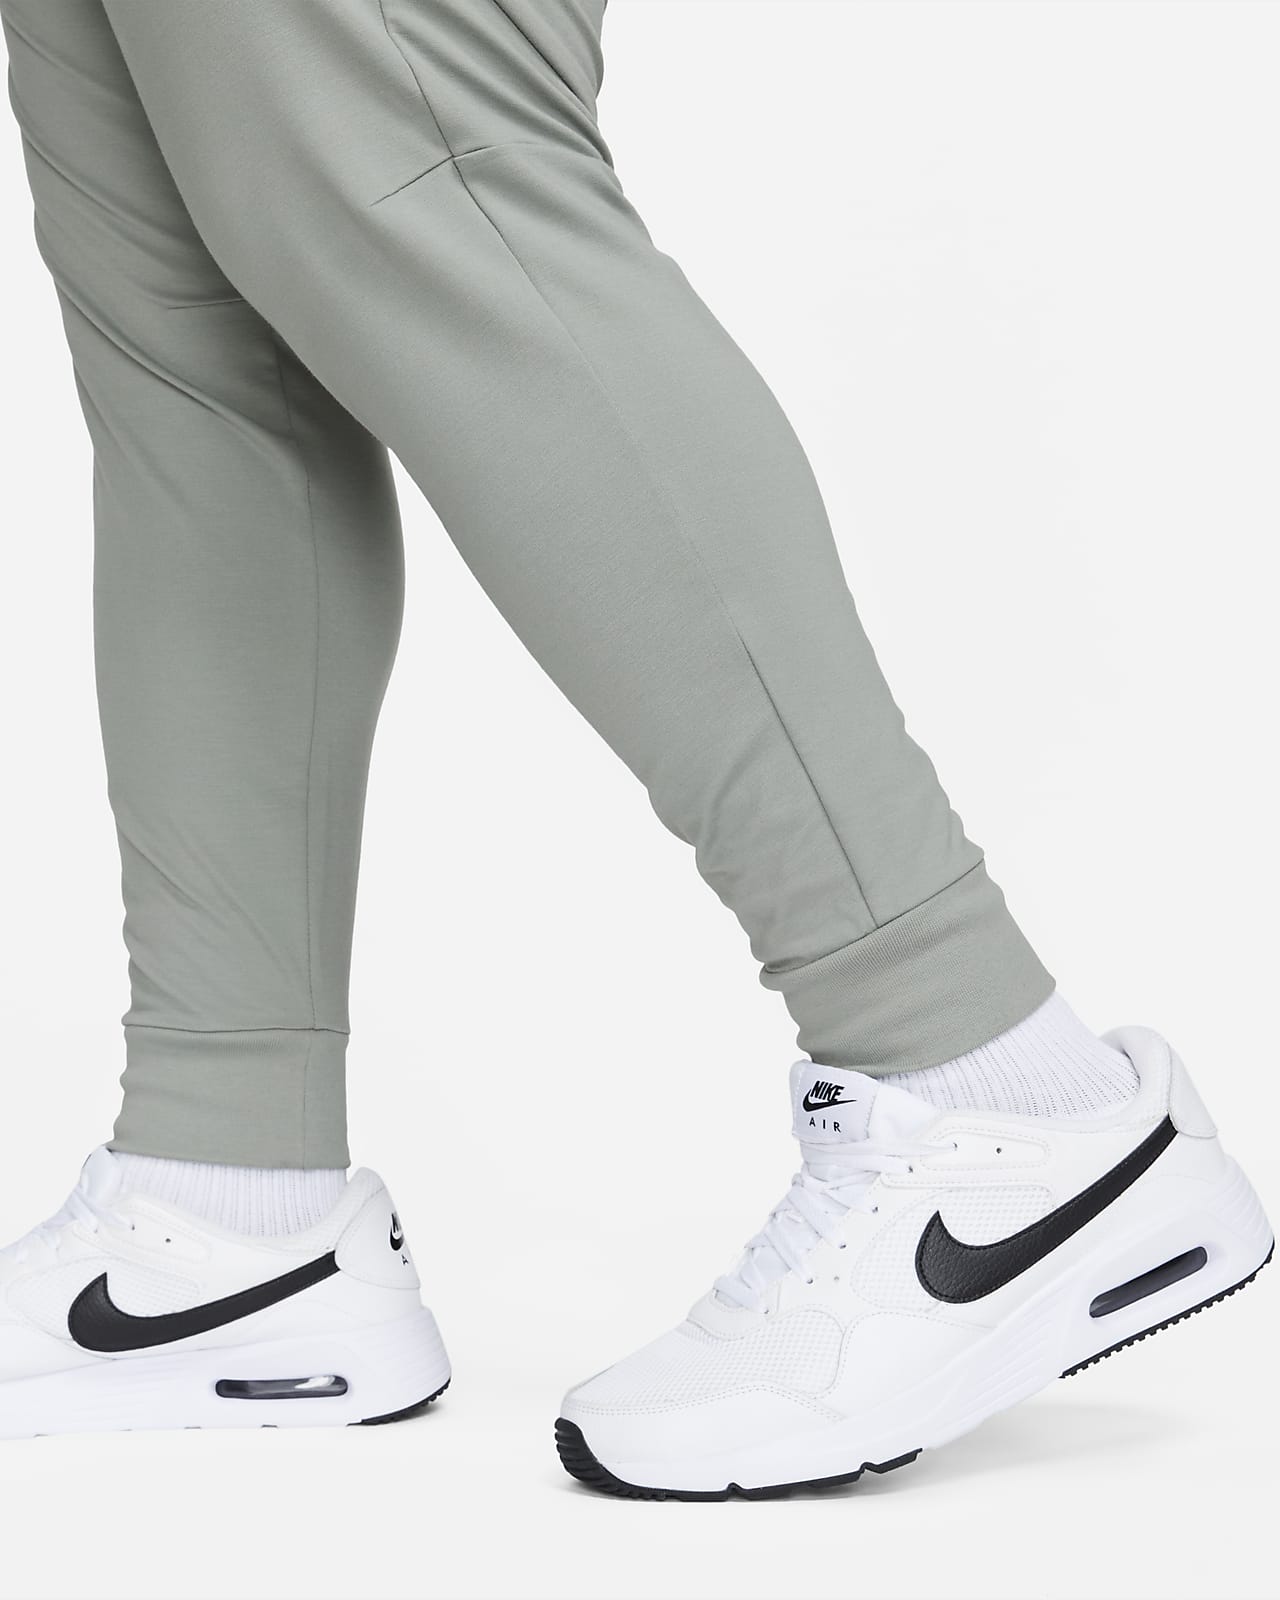 Nike Leggings Performance Joggers Tech Slim Fit Trousers Tracksuit Bottoms L  